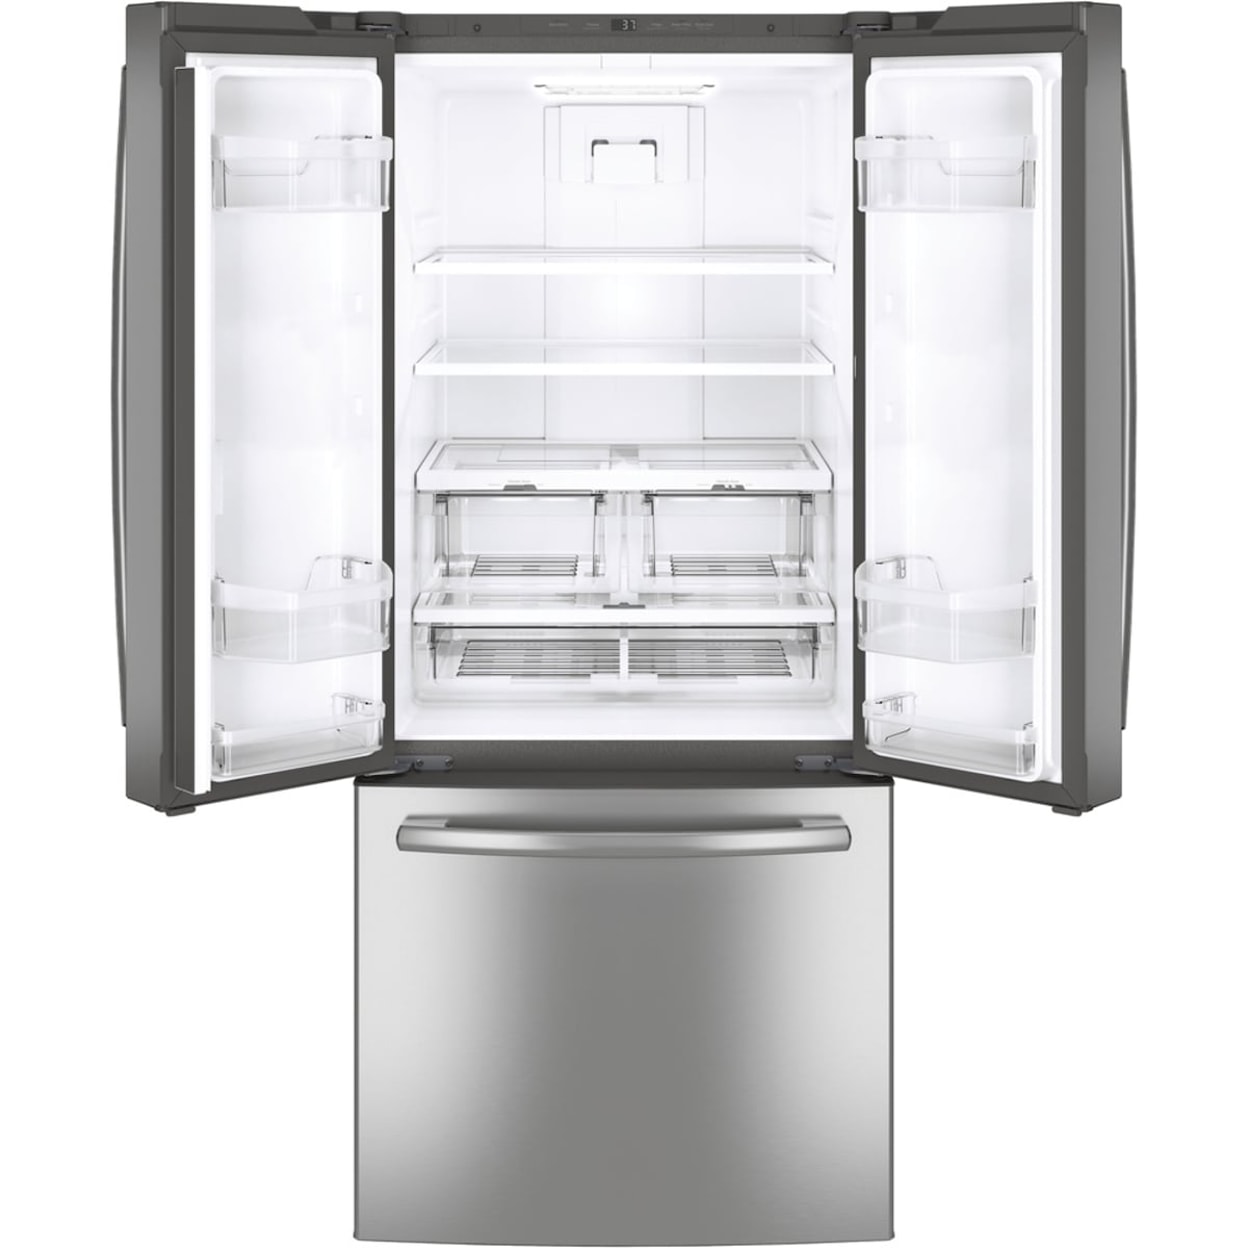 GE Appliances GE Appliances French-Door Refrigerator